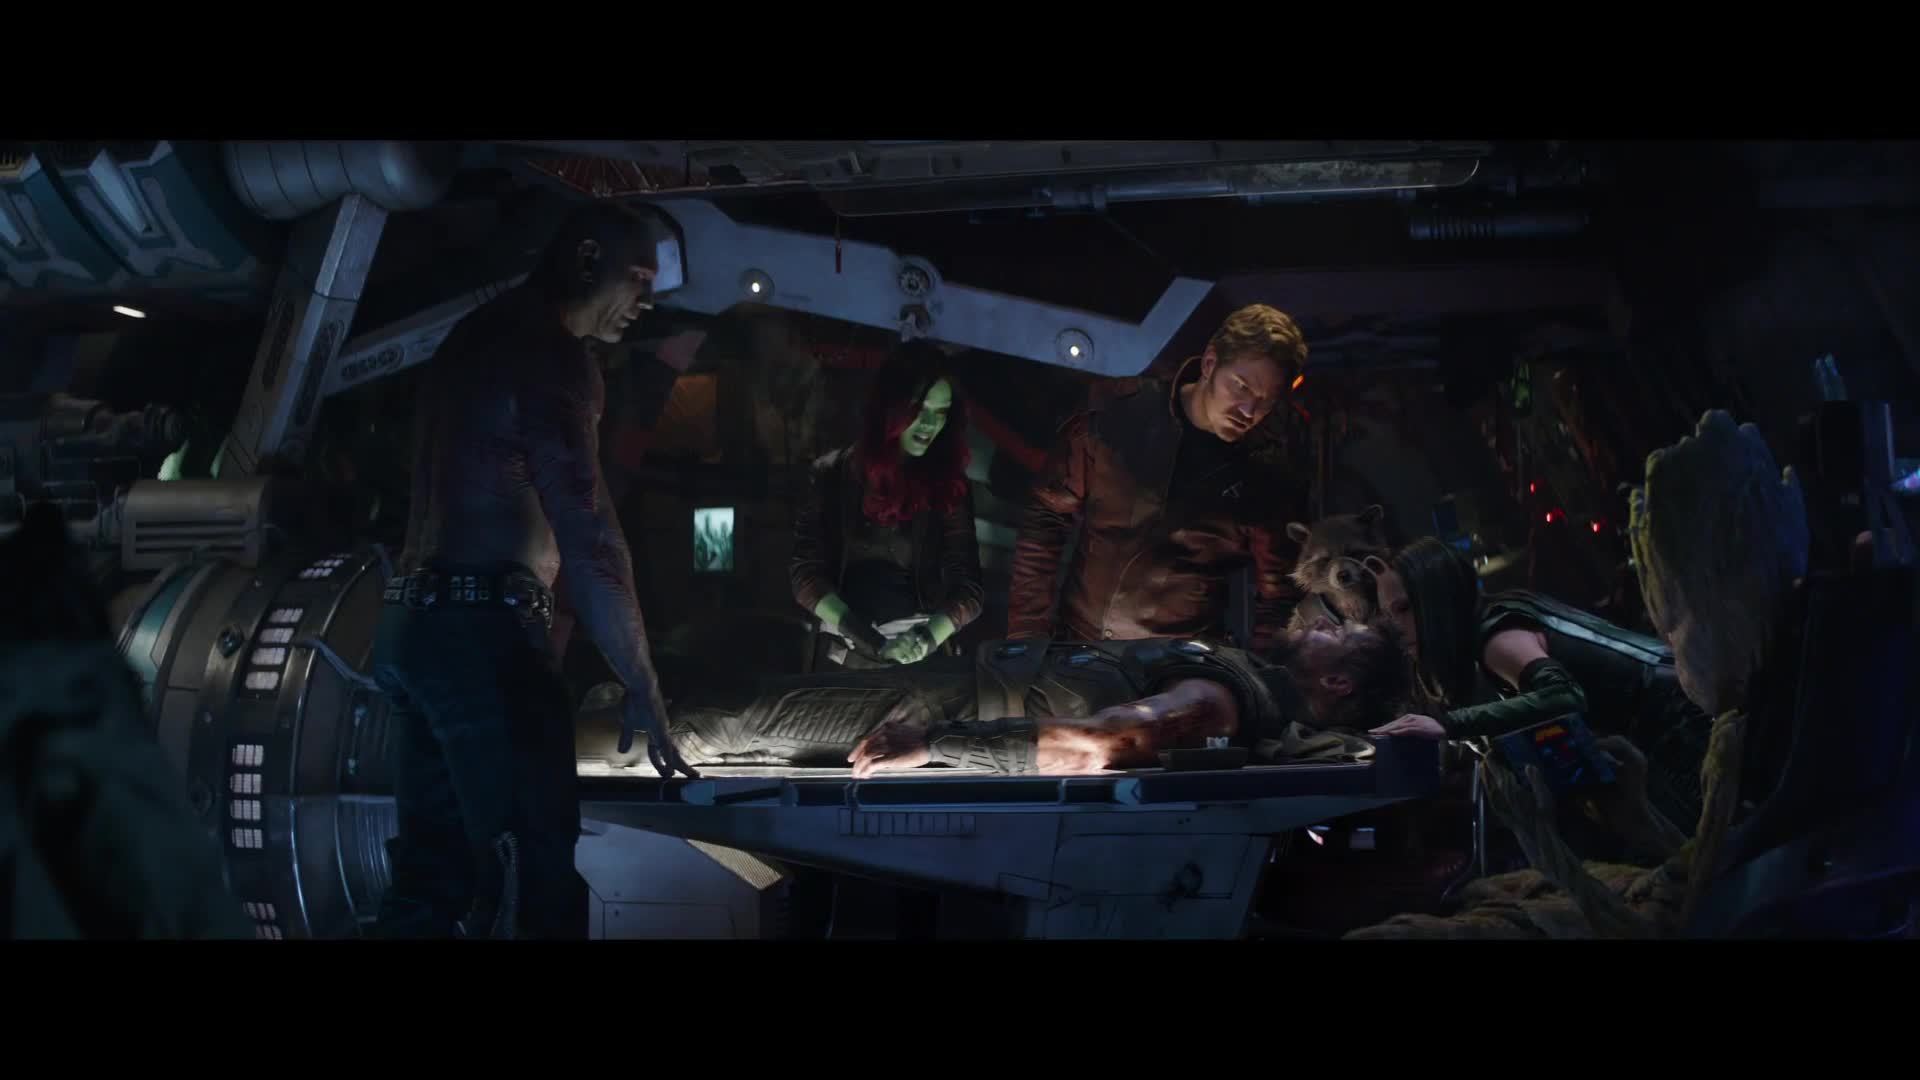 Marvel Studios' Avengers: Infinity War -- "Family" Featurette